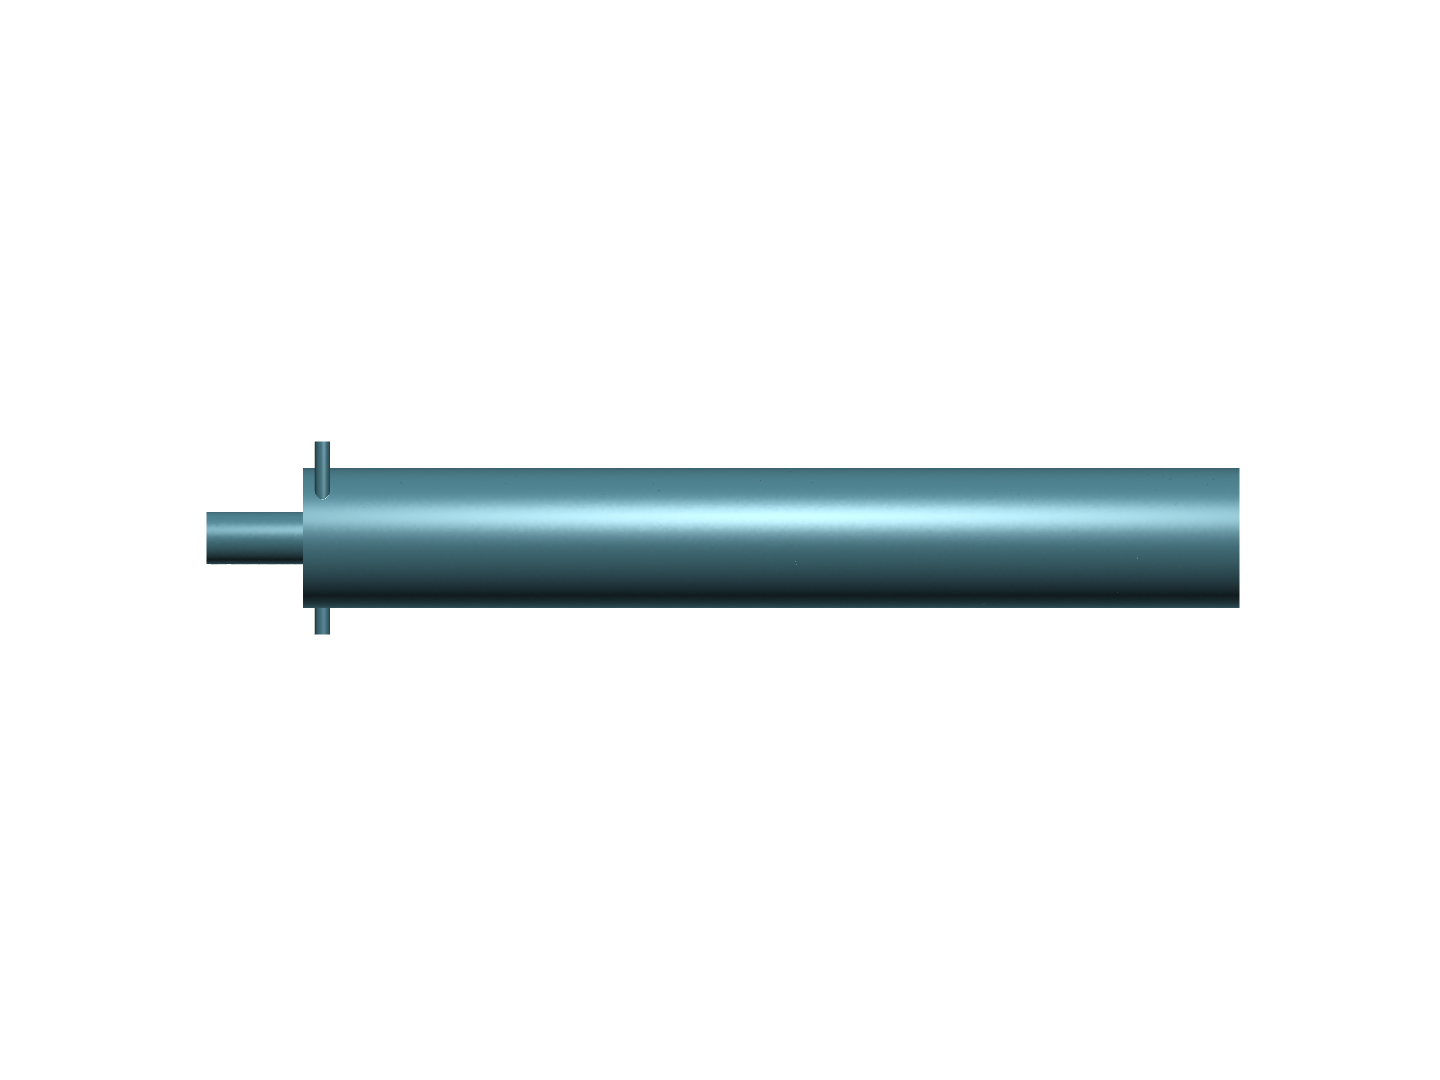 Vortex Tube image